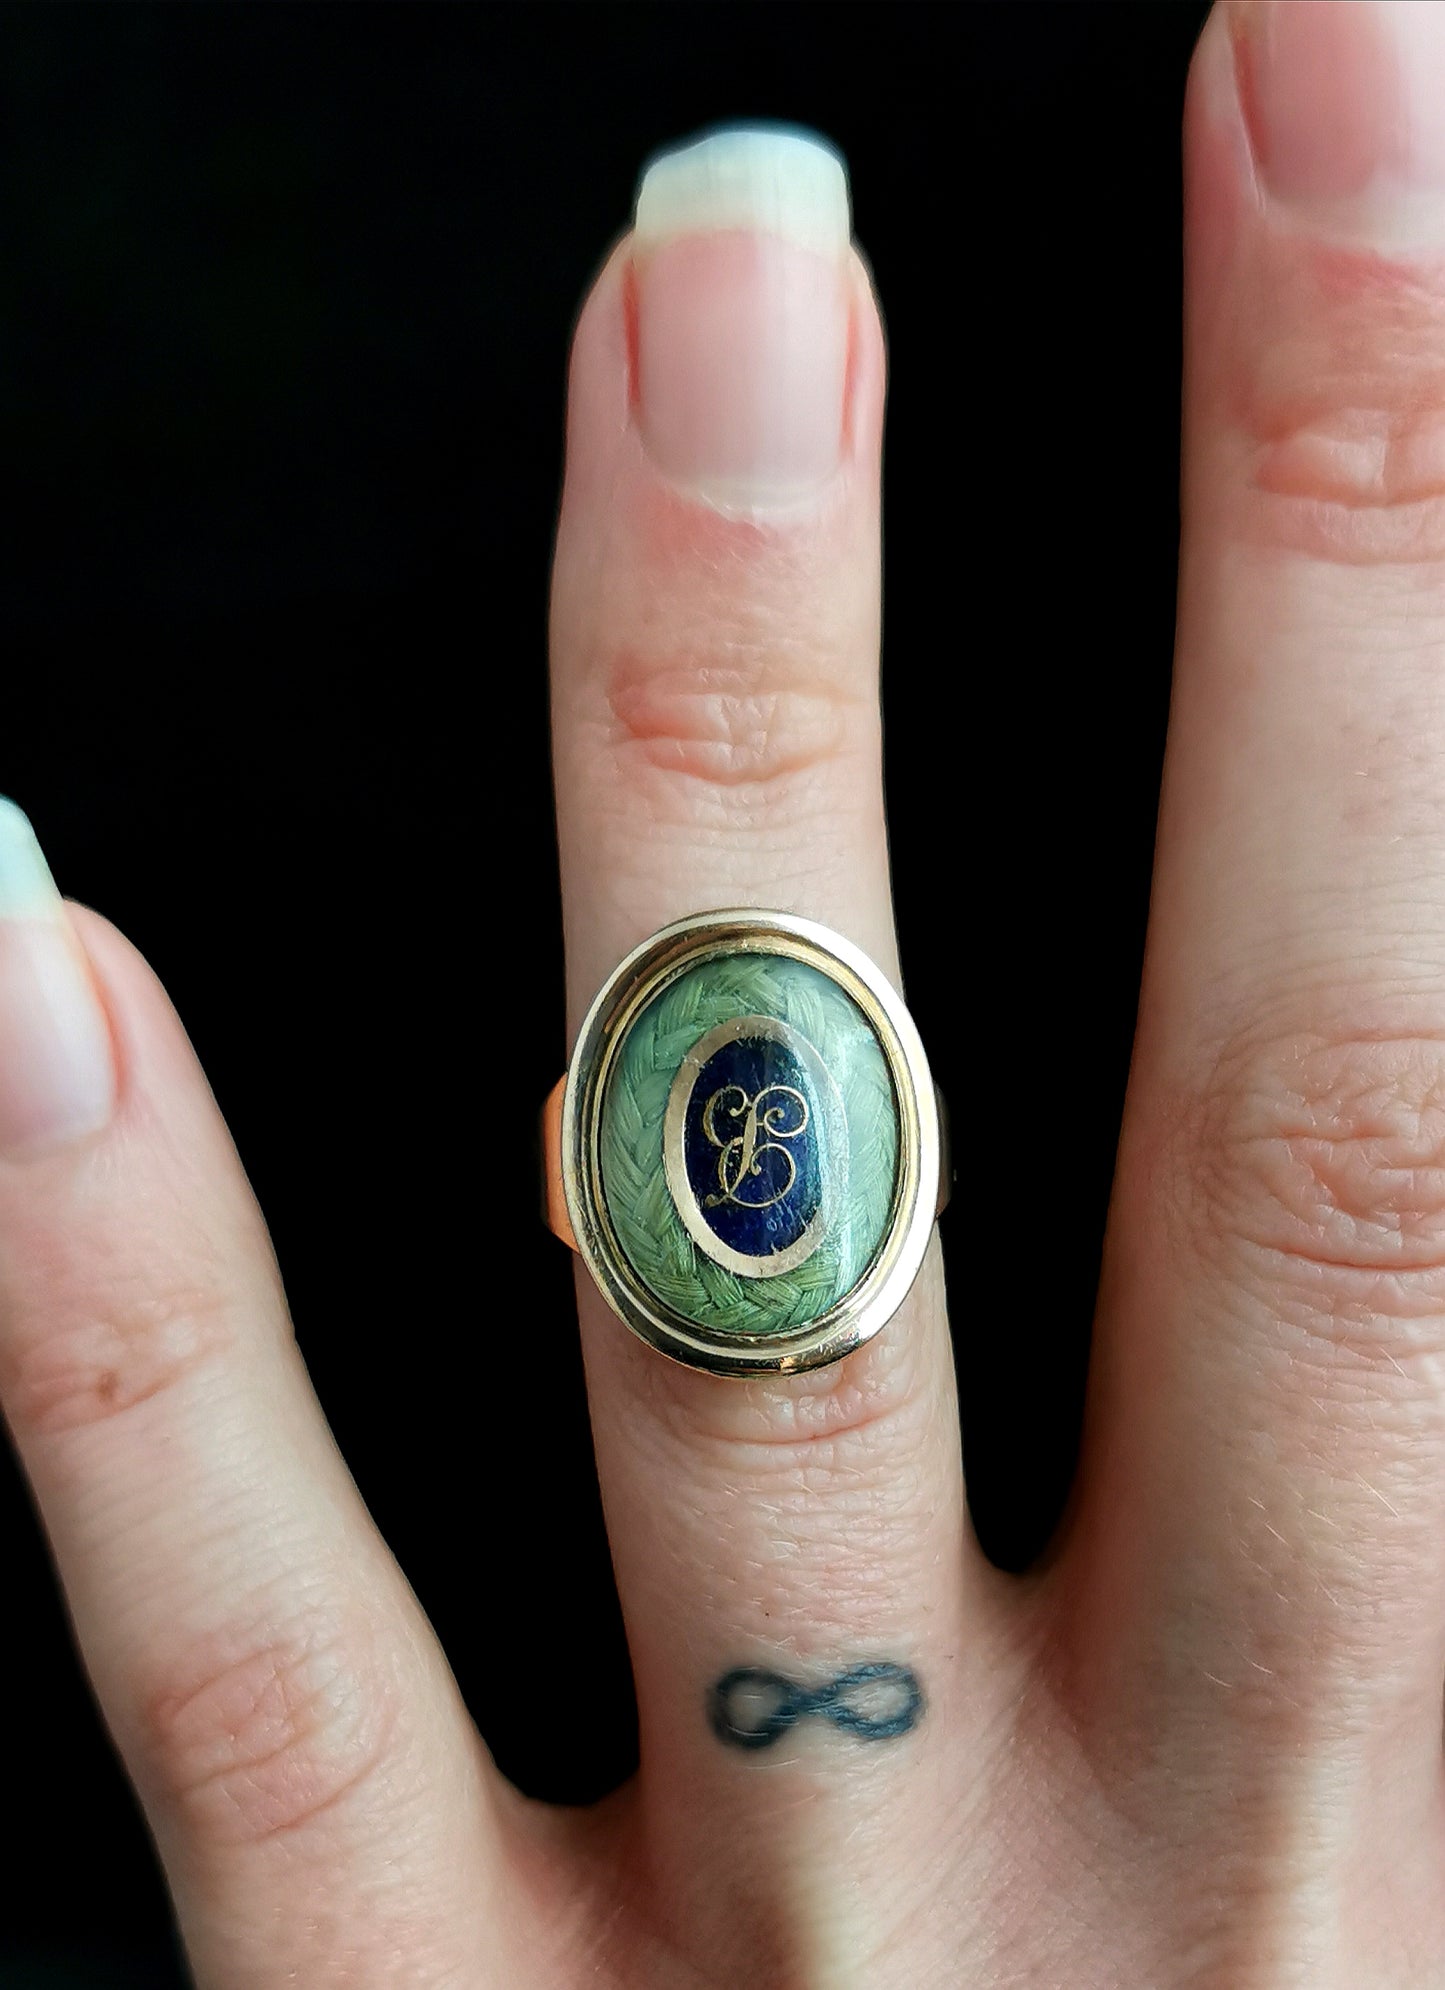 Antique Georgian mourning ring, 18ct gold, Blue enamel and Hairwork